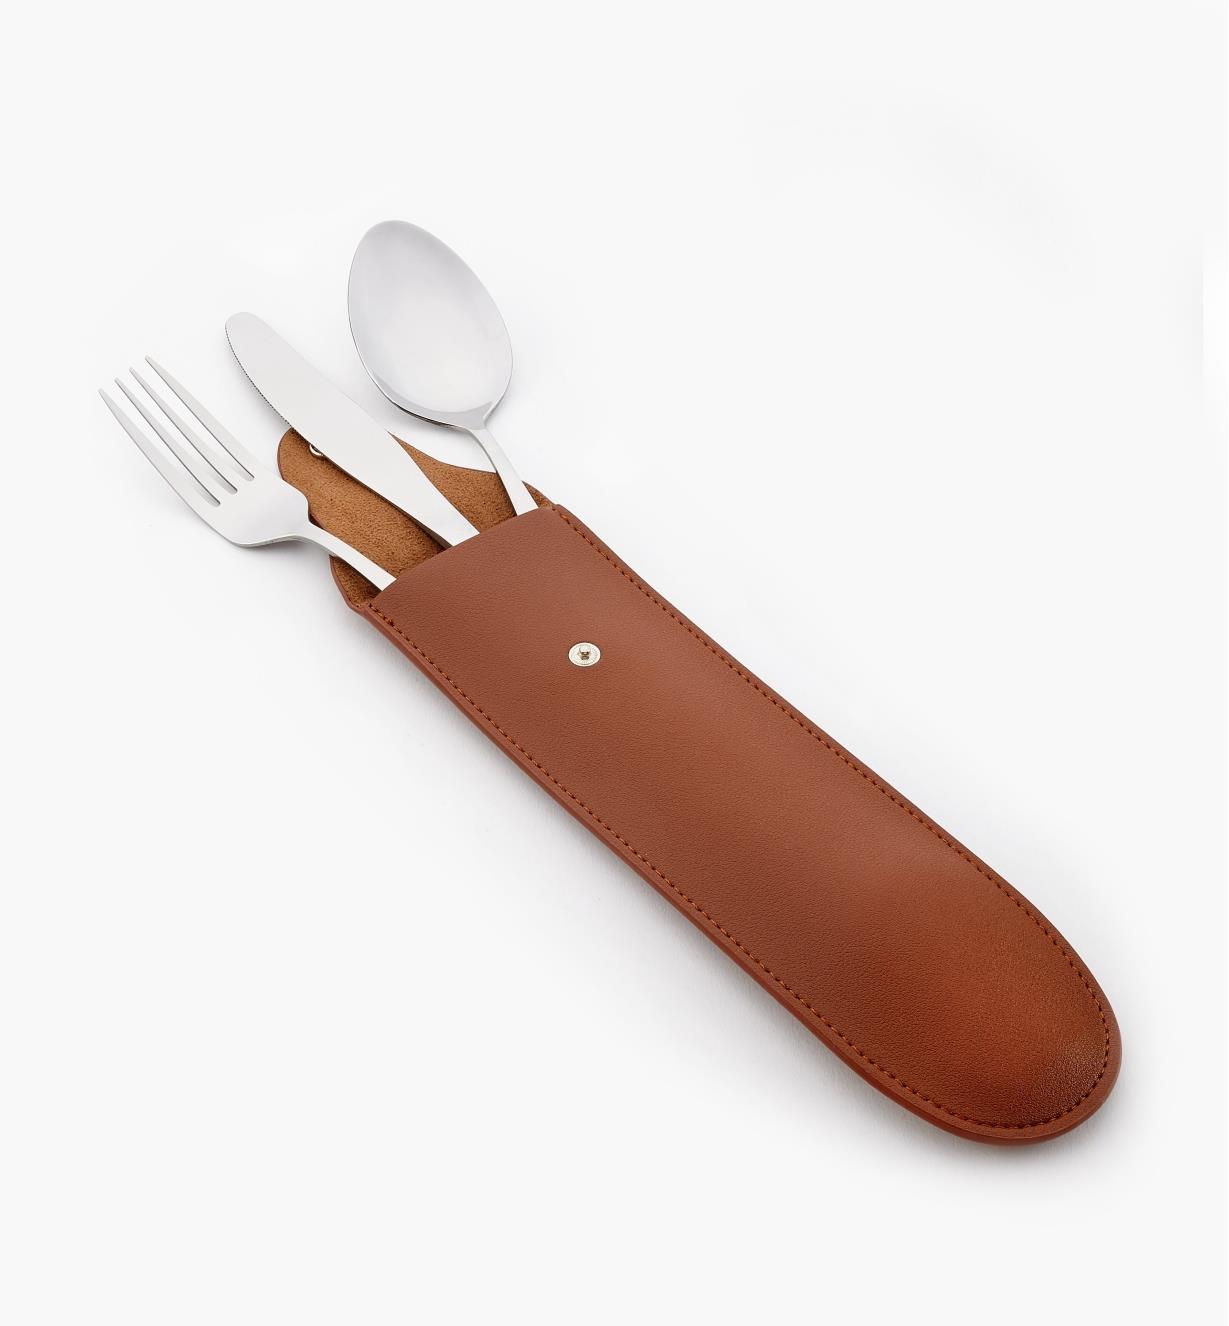 09A0408 - Portable Cutlery Set